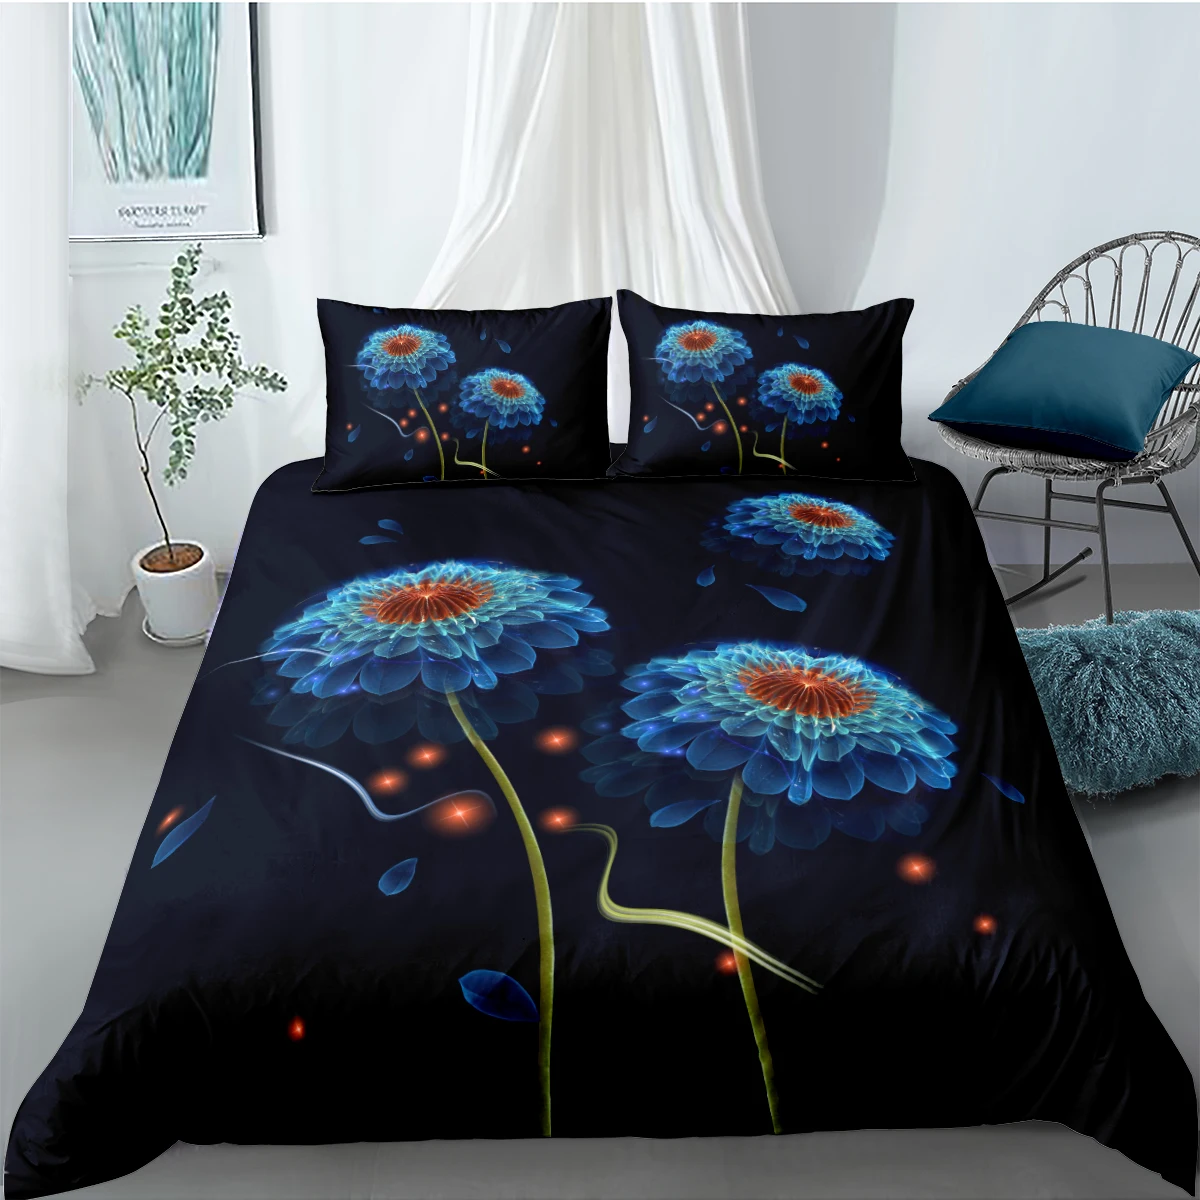 

Bedding Set 3D Black Duvet Cover Sets Flower Comforter Cases and Pillow Slips King Queen Super King Twin Full Size 173*230cm